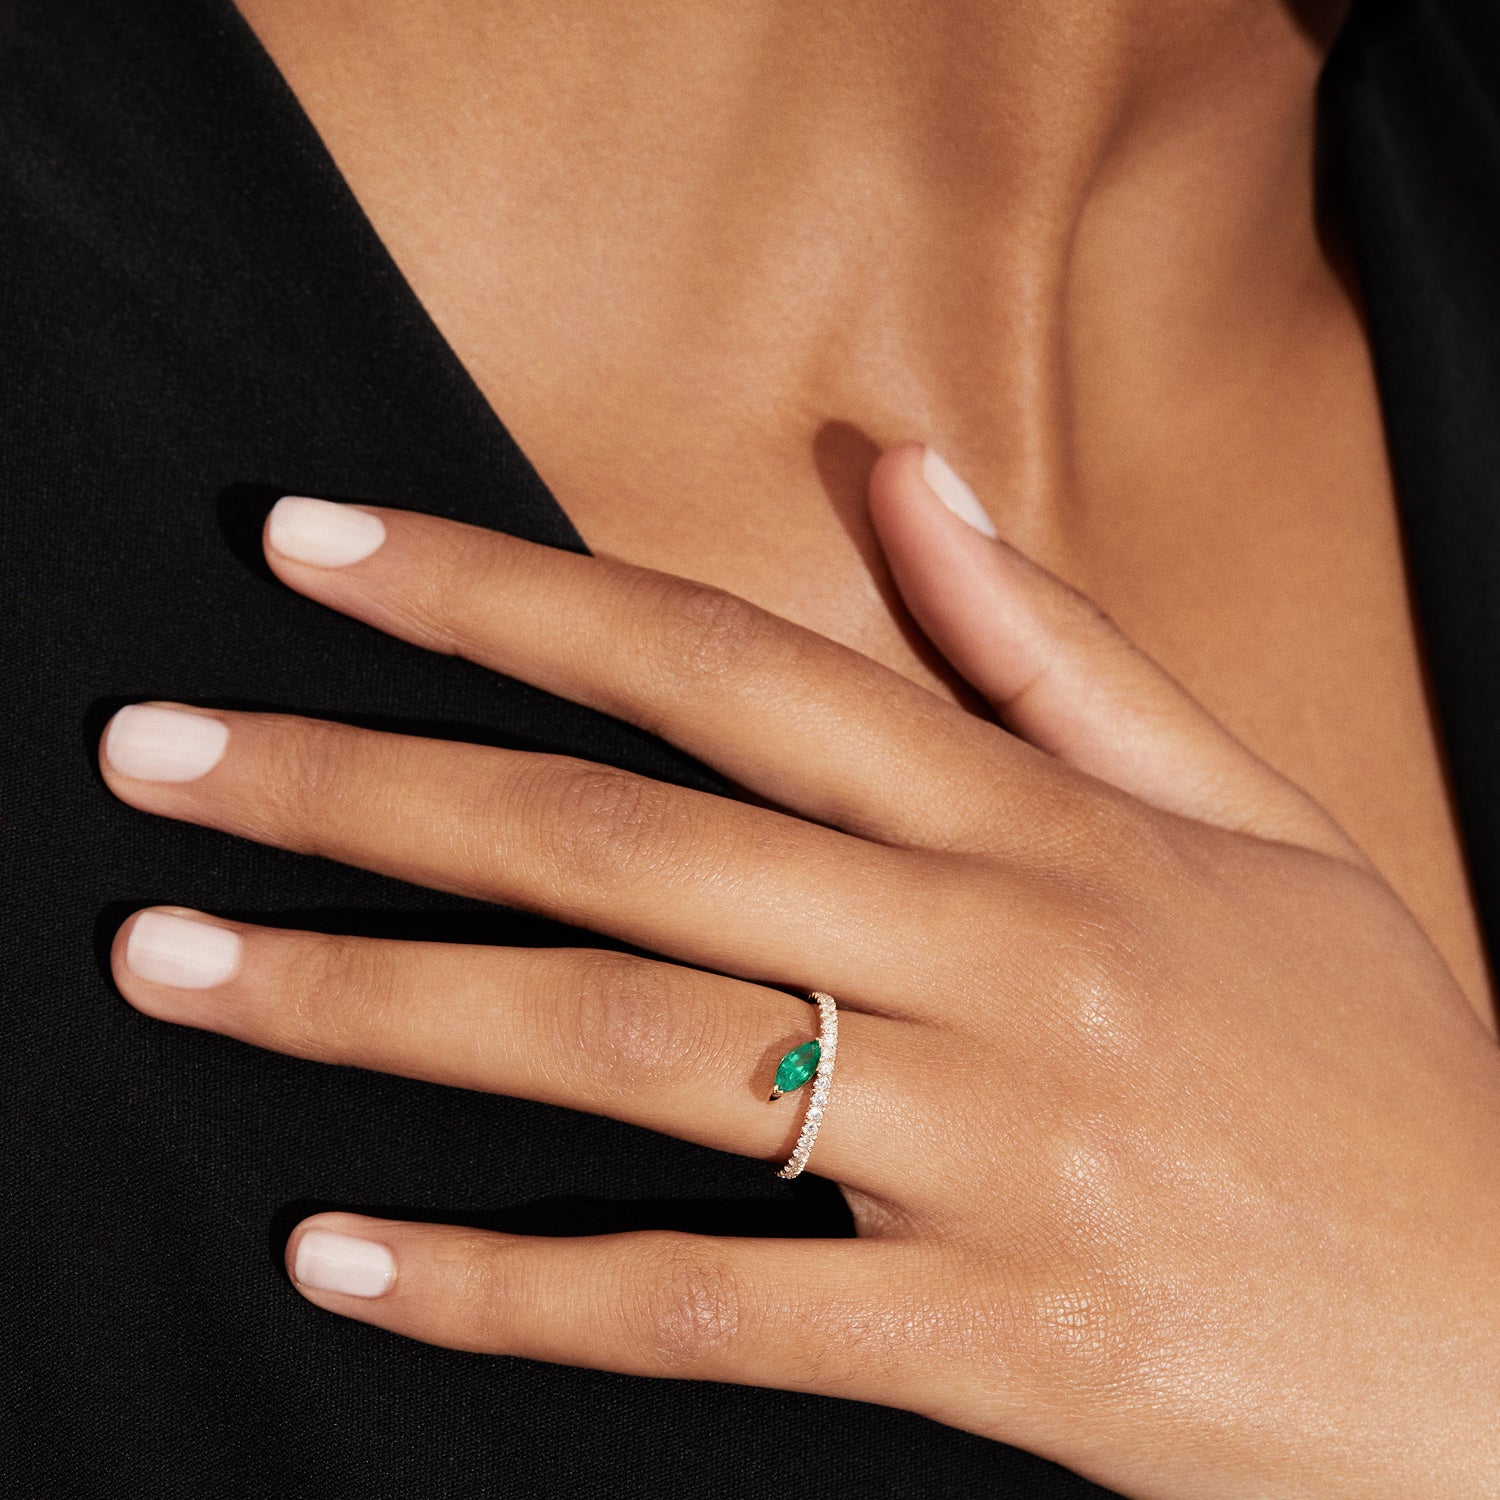 Defne Deluxe Ring - Emerald & White Diamonds